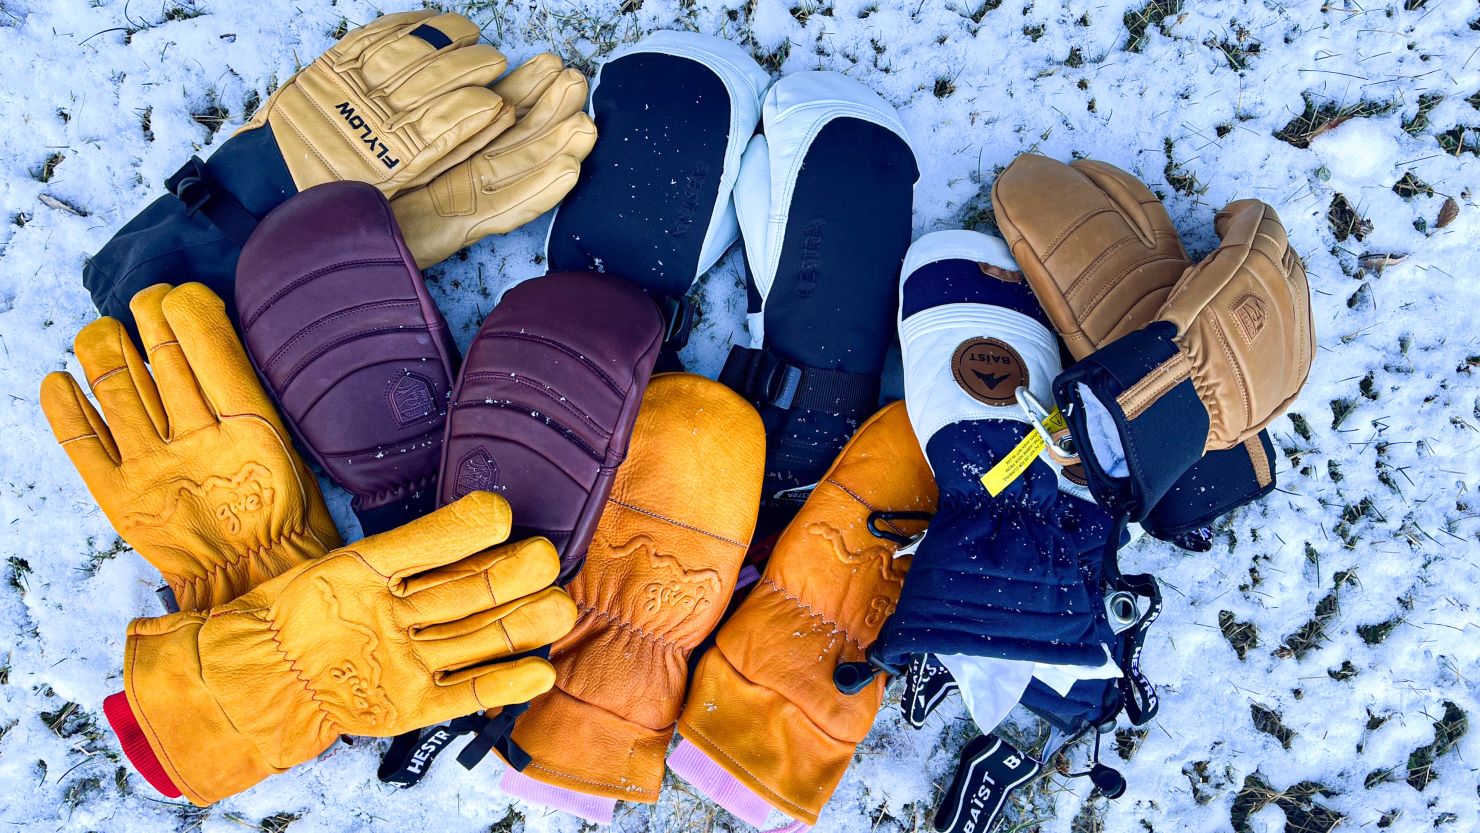 https://media.cnn.com/api/v1/images/stellar/prod/best-ski-gloves-mittens-lead-cnnu.jpg?c=16x9&q=h_833,w_1480,c_fill